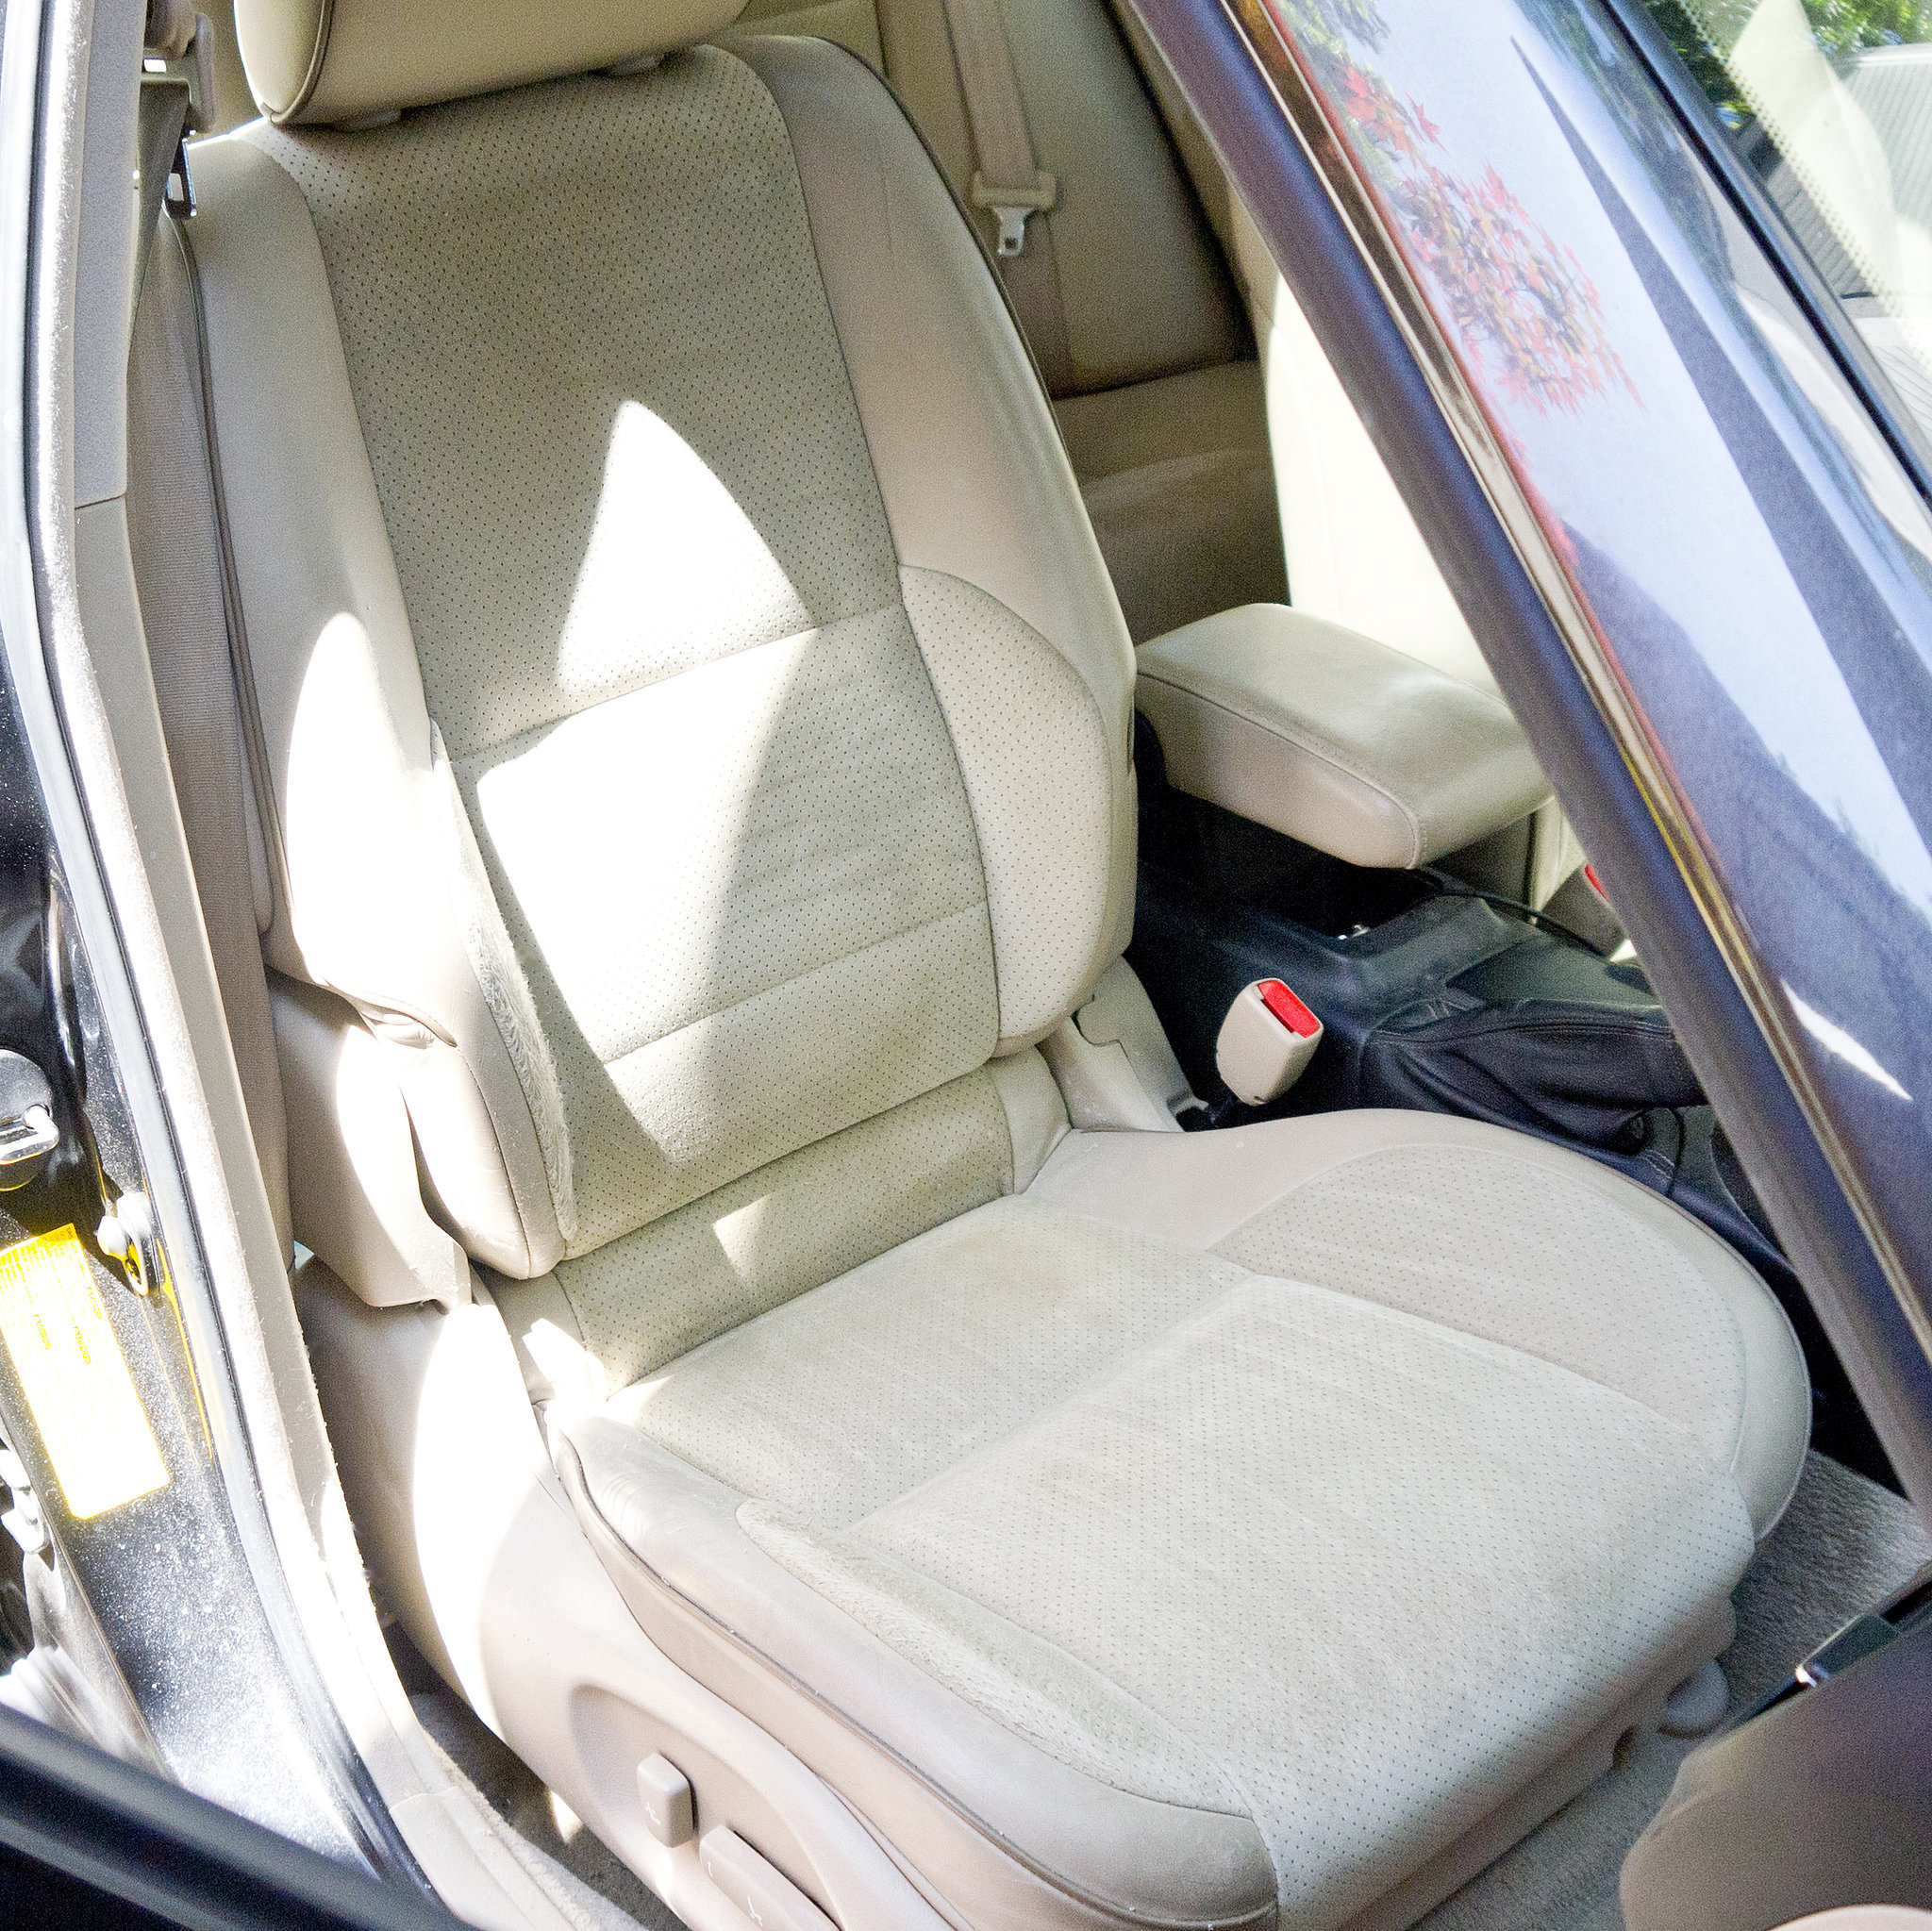 How to Clean Car Seats | POPSUGAR Smart Living